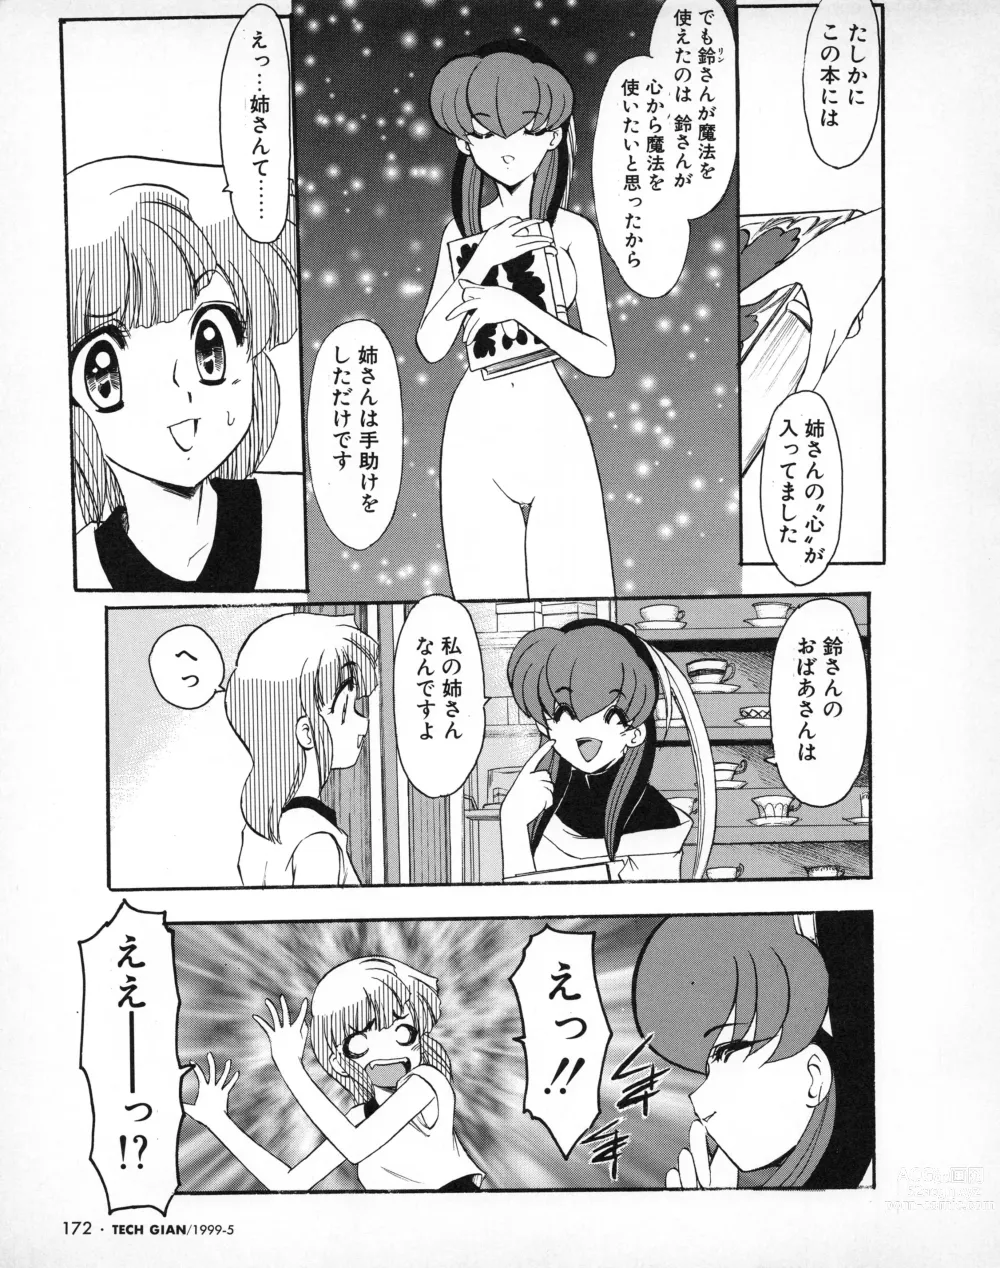 Page 171 of manga Tech Gian 031